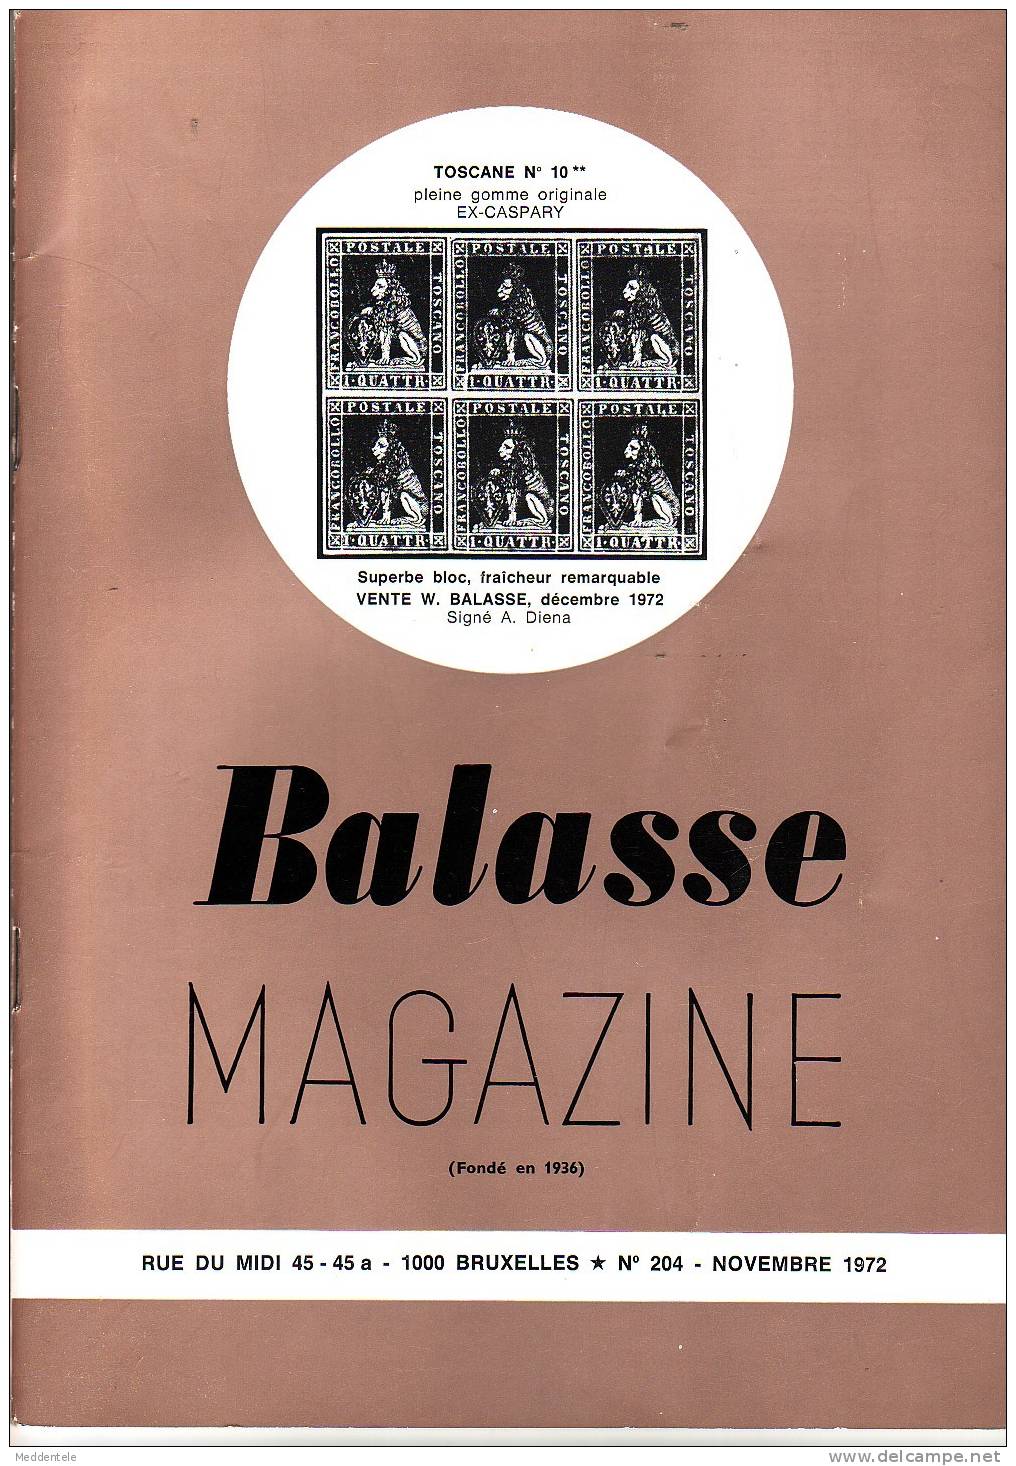 BALASSE MAGAZINE N° 204 - French (from 1941)